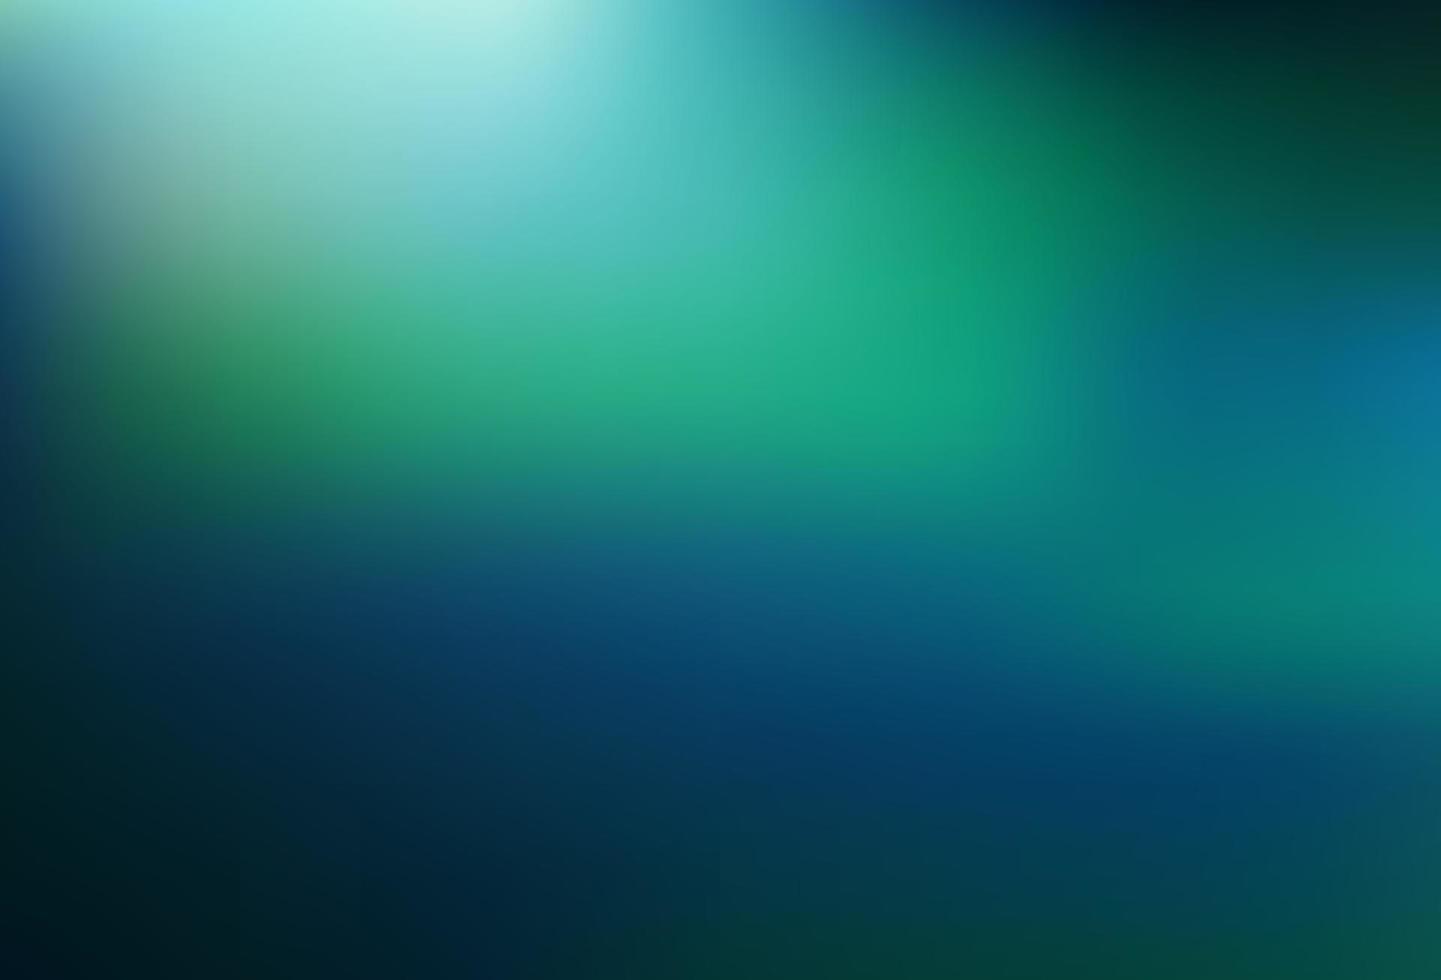 Plantilla brillante abstracta de vector azul oscuro, verde.